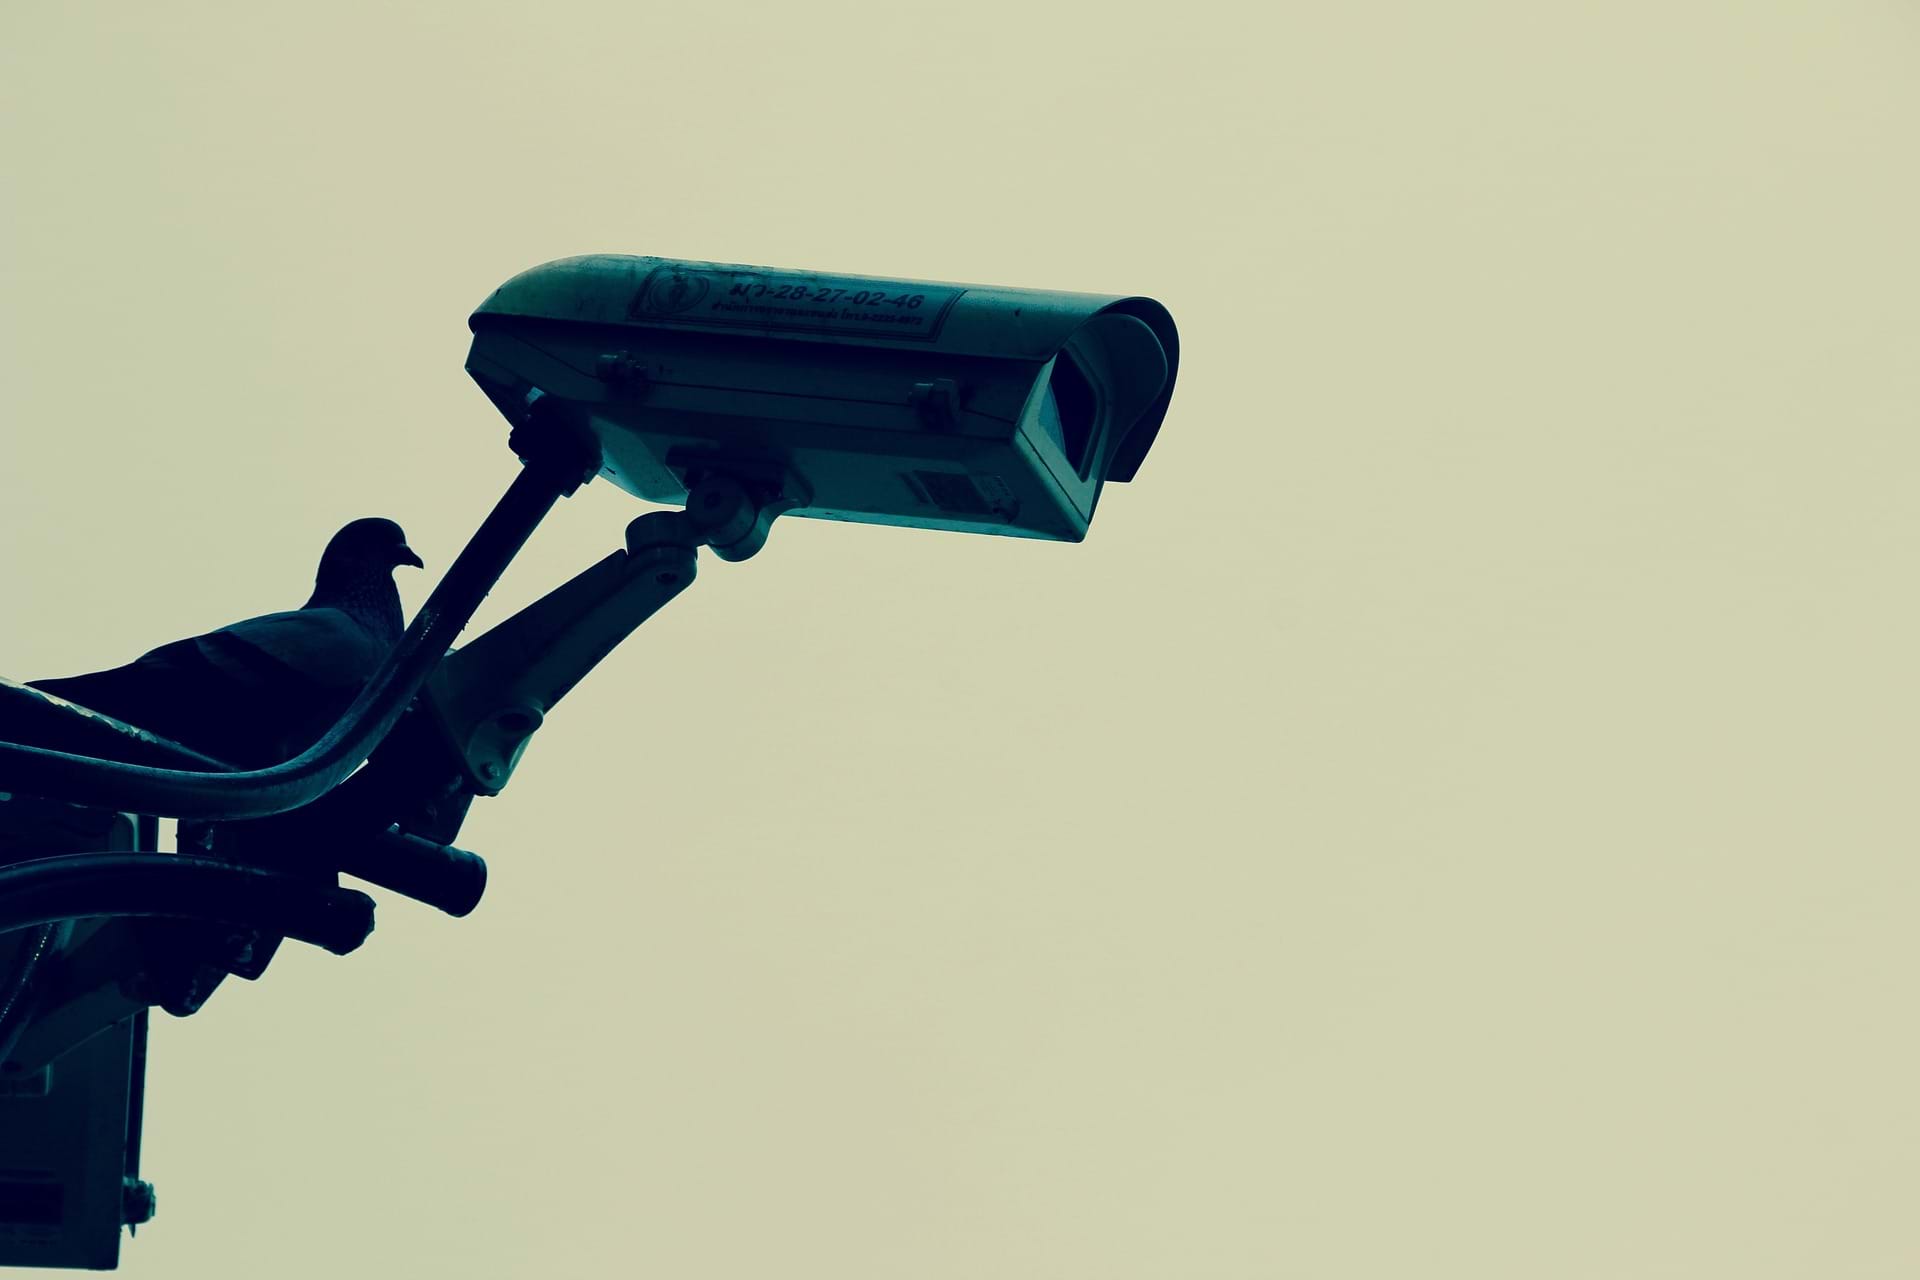 a CCTV camera installed for outdoor surveillance